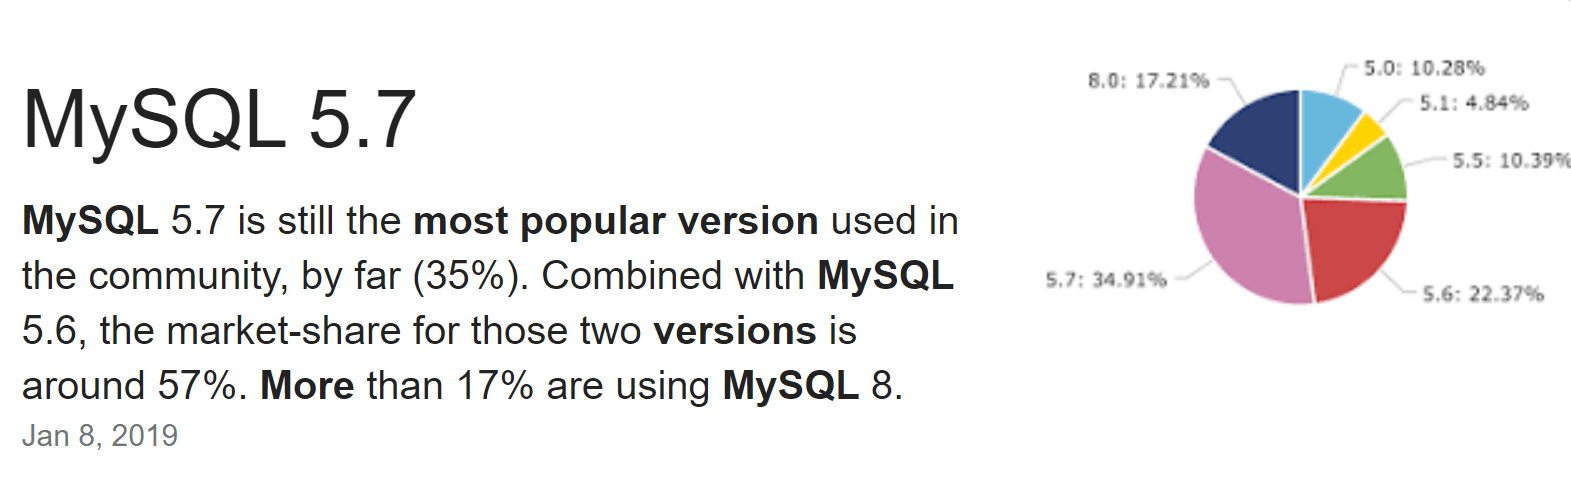 Configuring MySQL 5.7